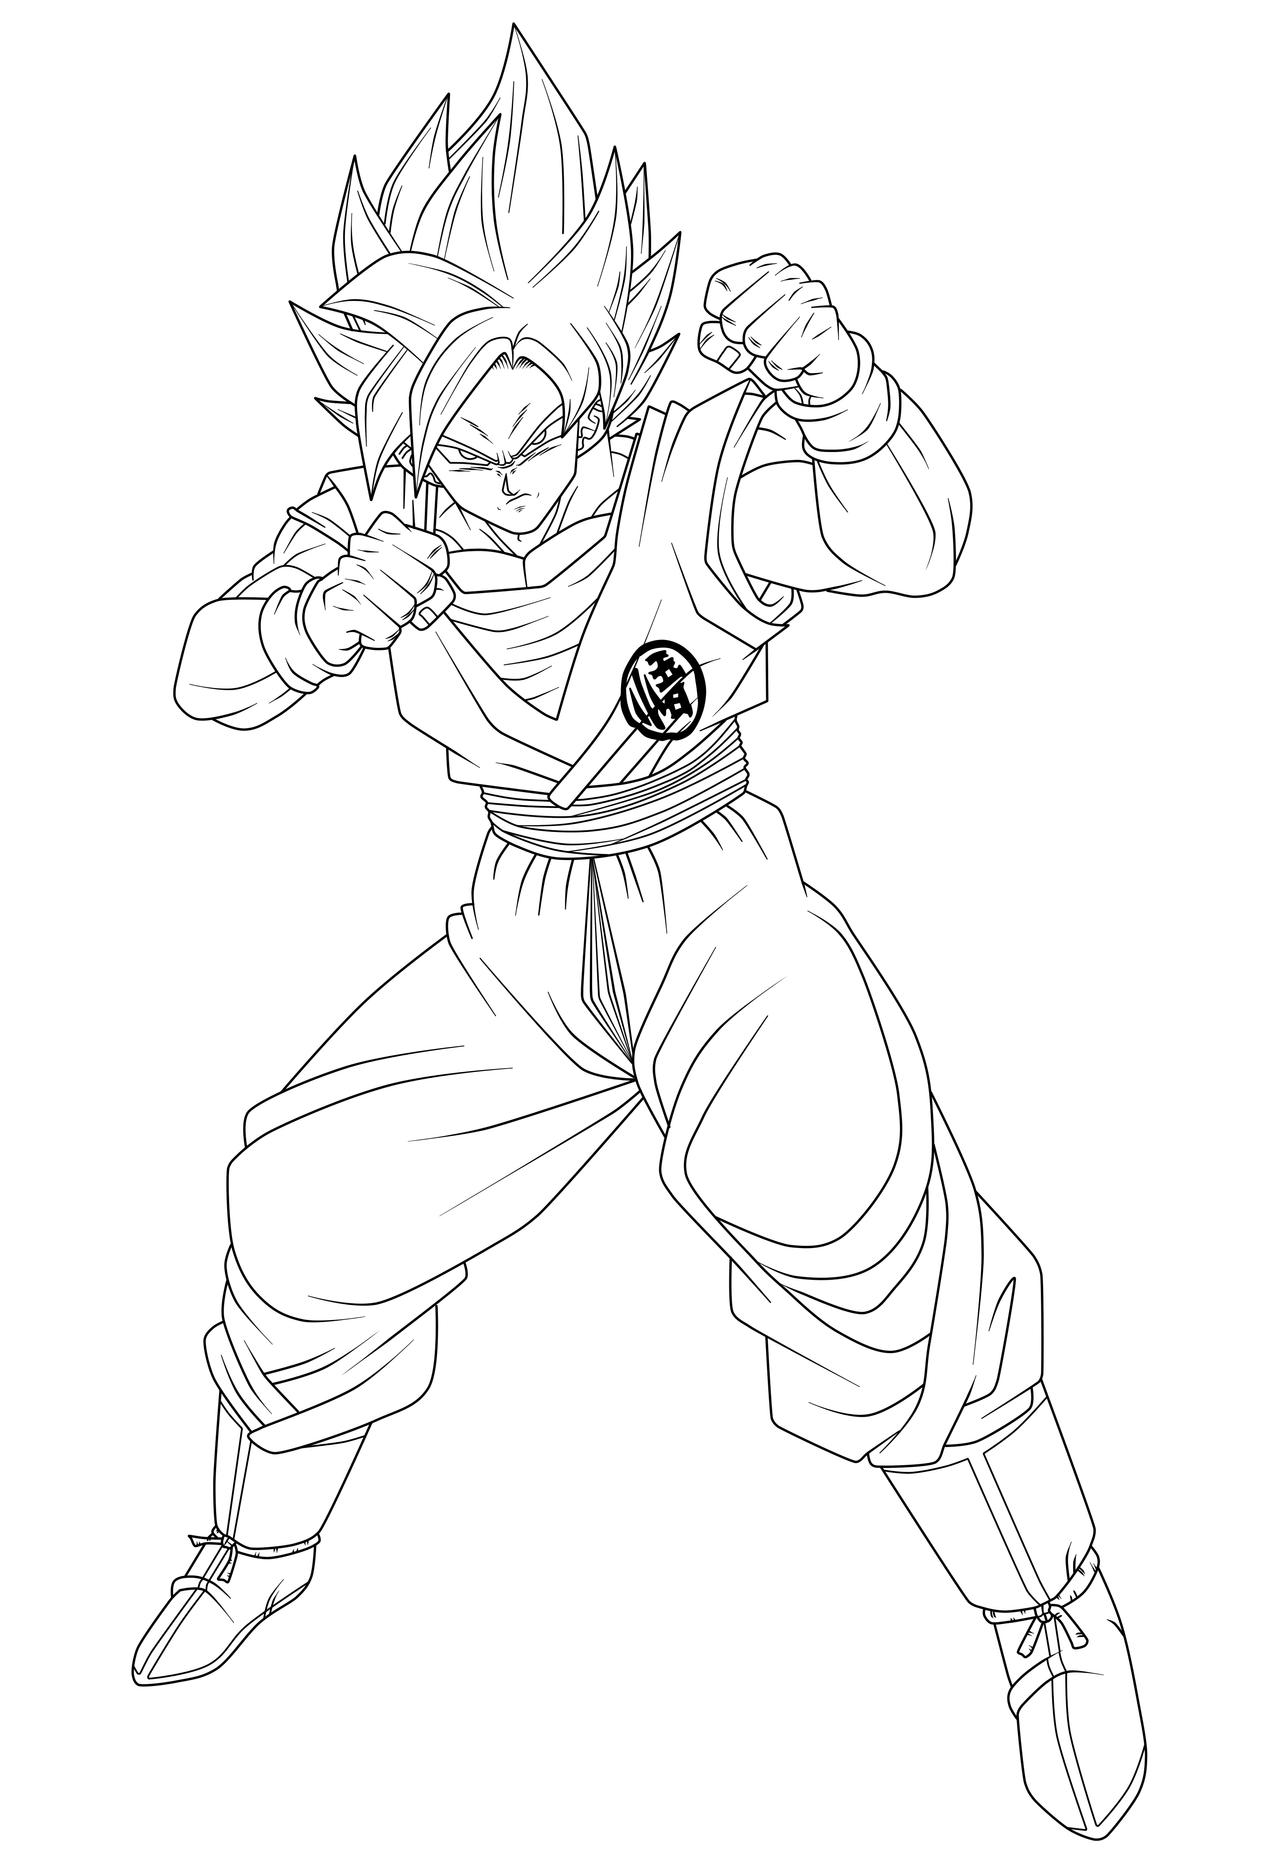 Goku colorir by HResende on DeviantArt